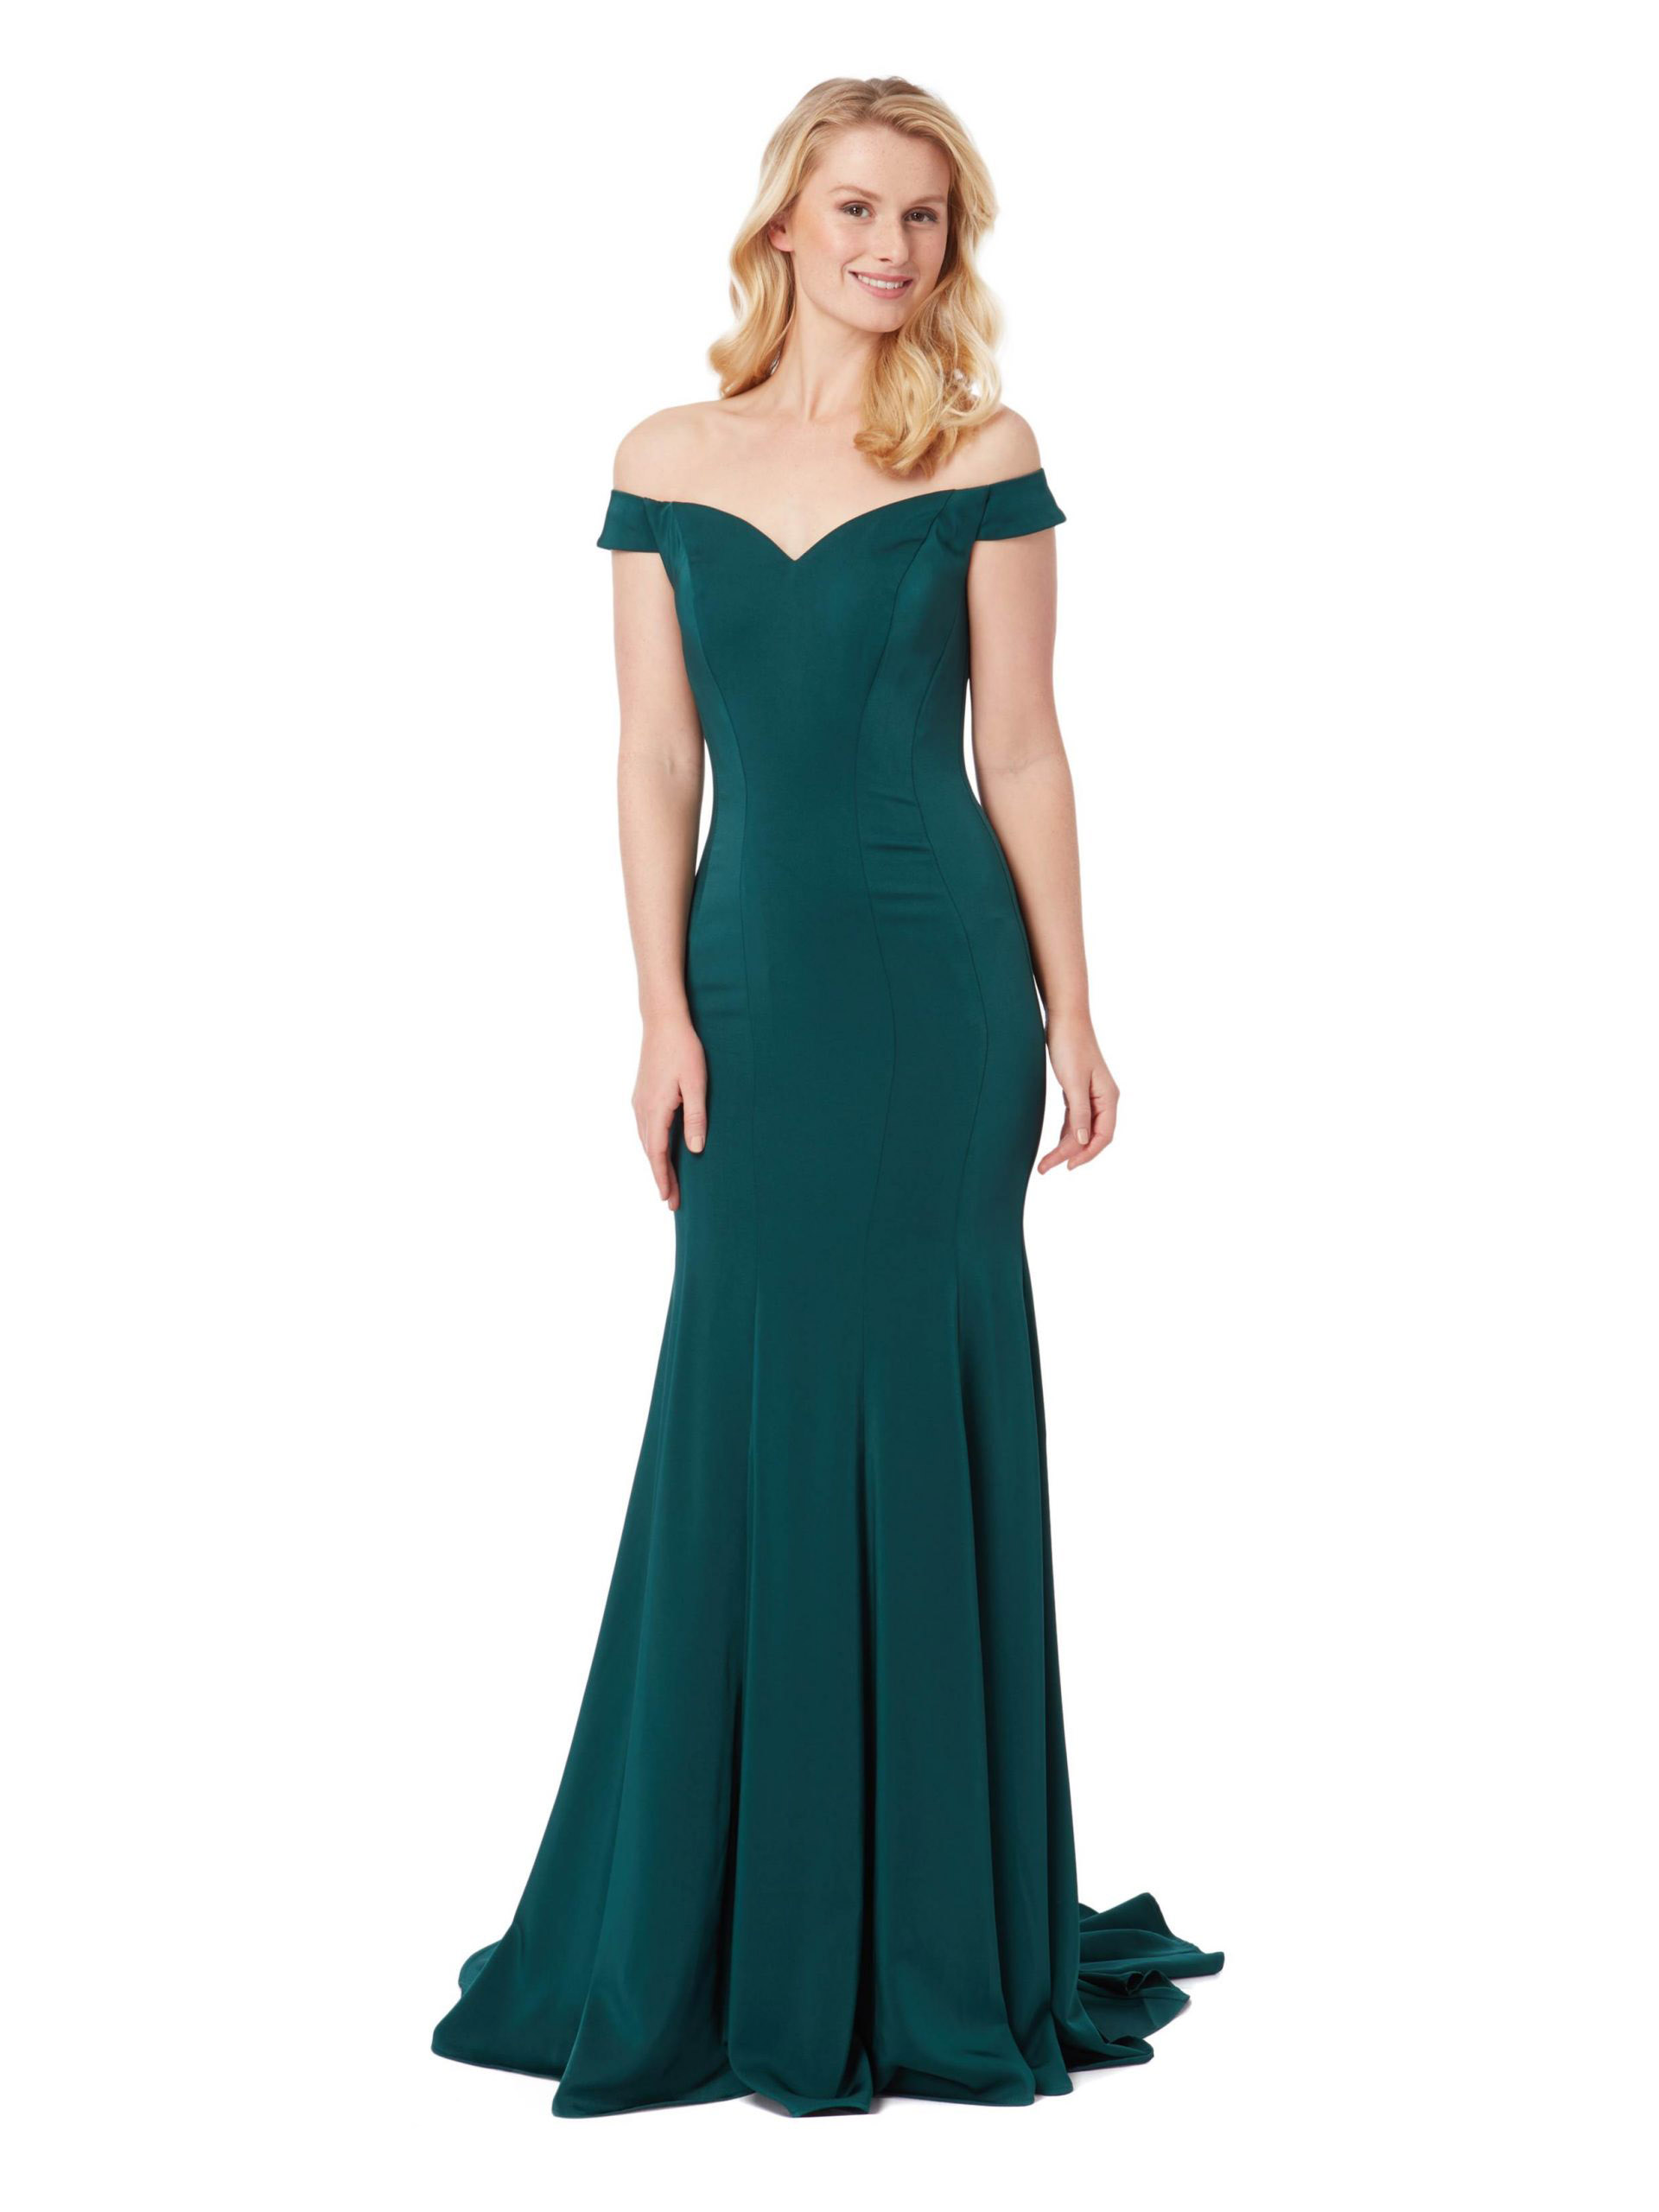 Mariela Emerald Prom Dress